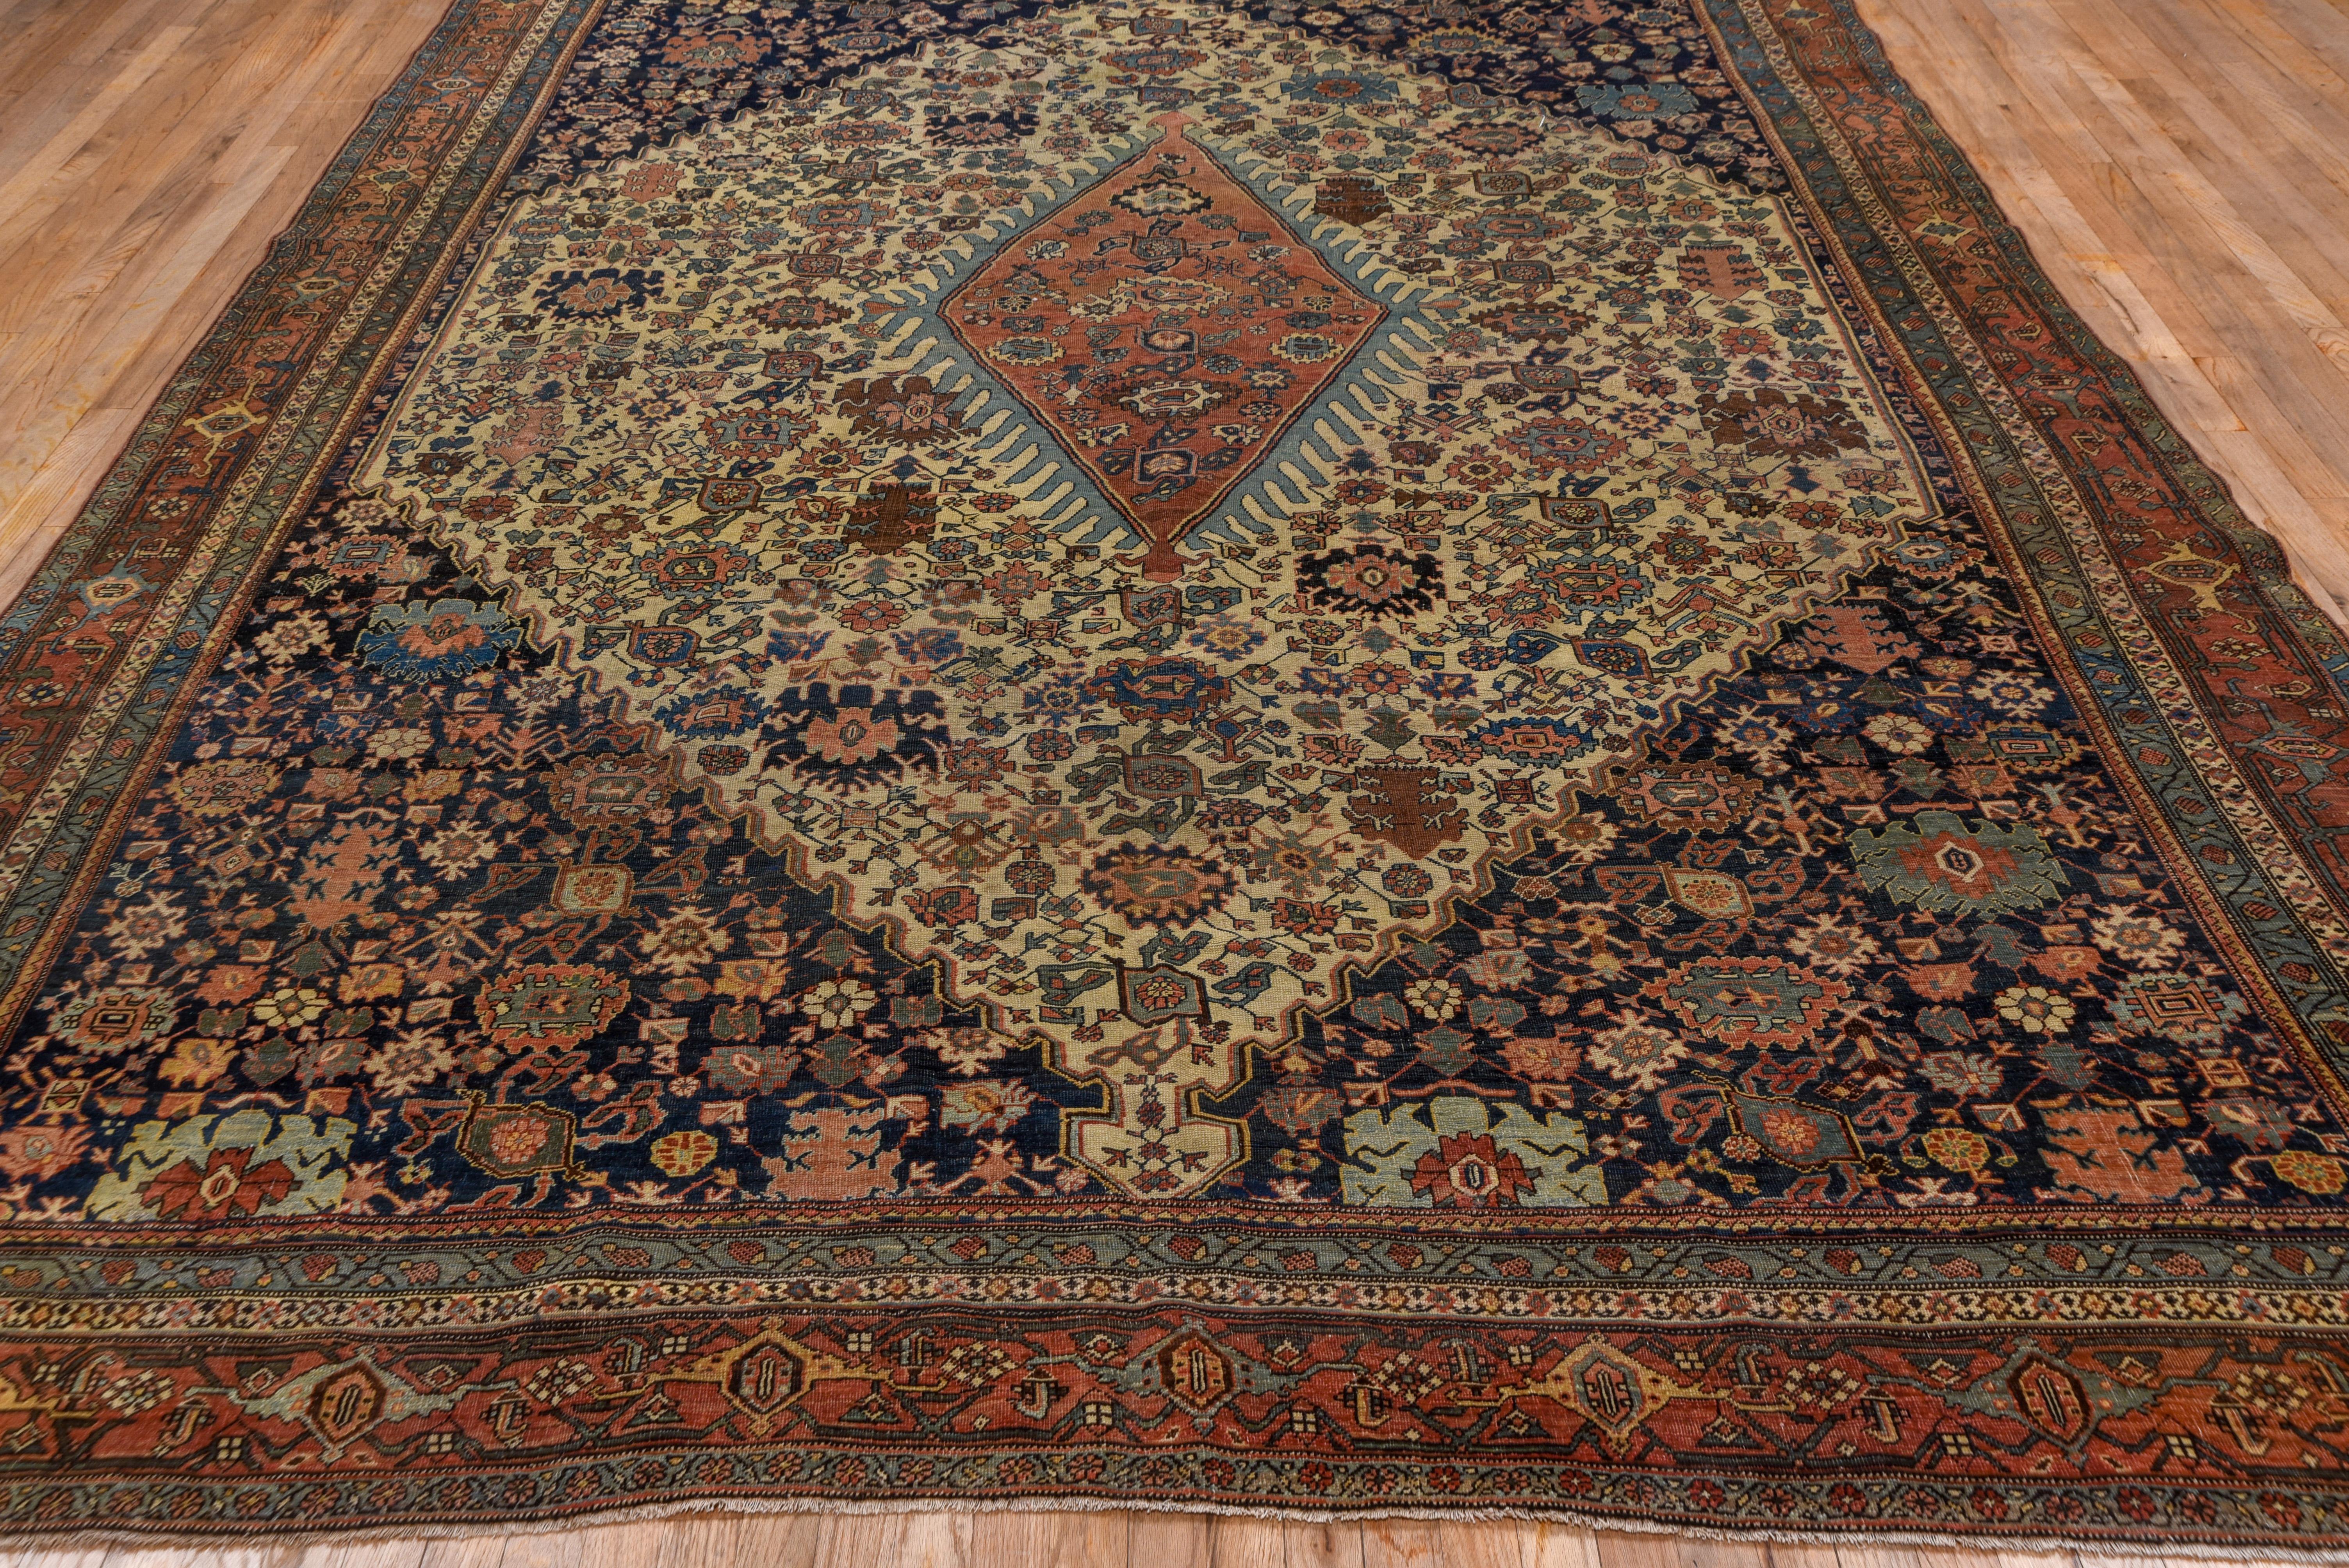 Hand-Knotted Fine Antique Persian Bidjar Carpet, Rich Colors, Crab Design For Sale